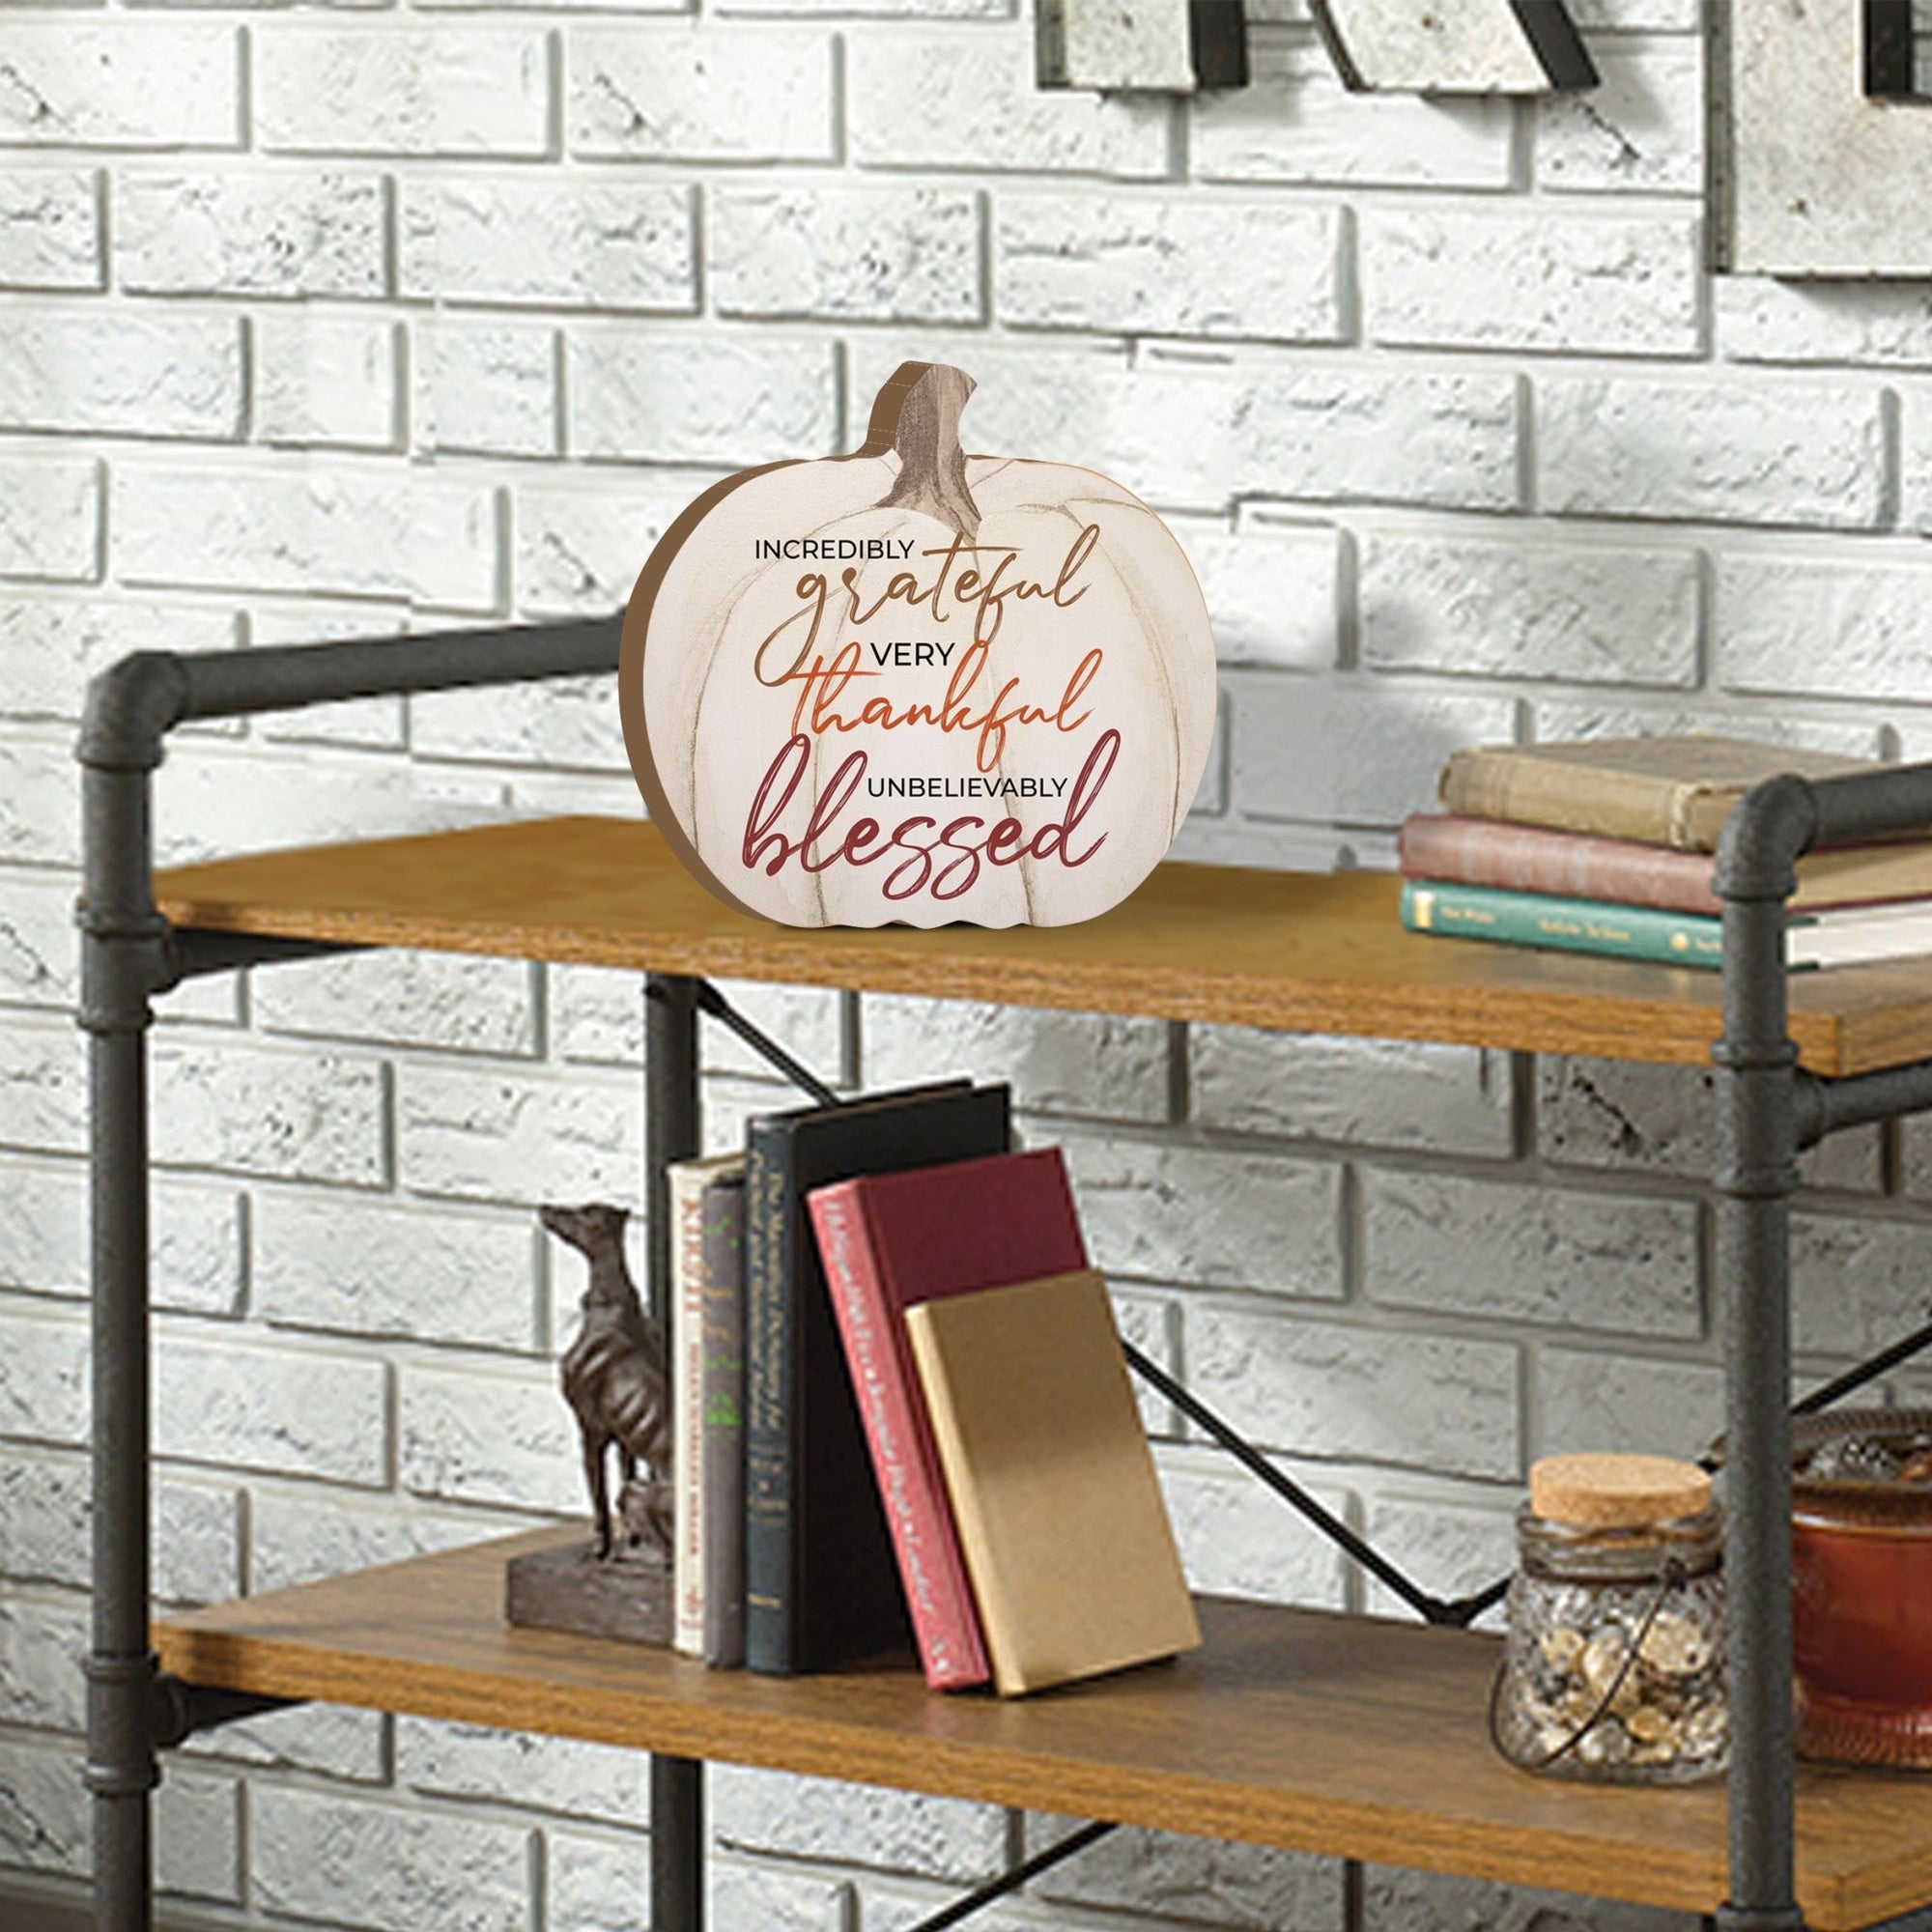 Pumpkin shelf decor Decorative Home Décor - Incredibly Grateful - LifeSong Milestones